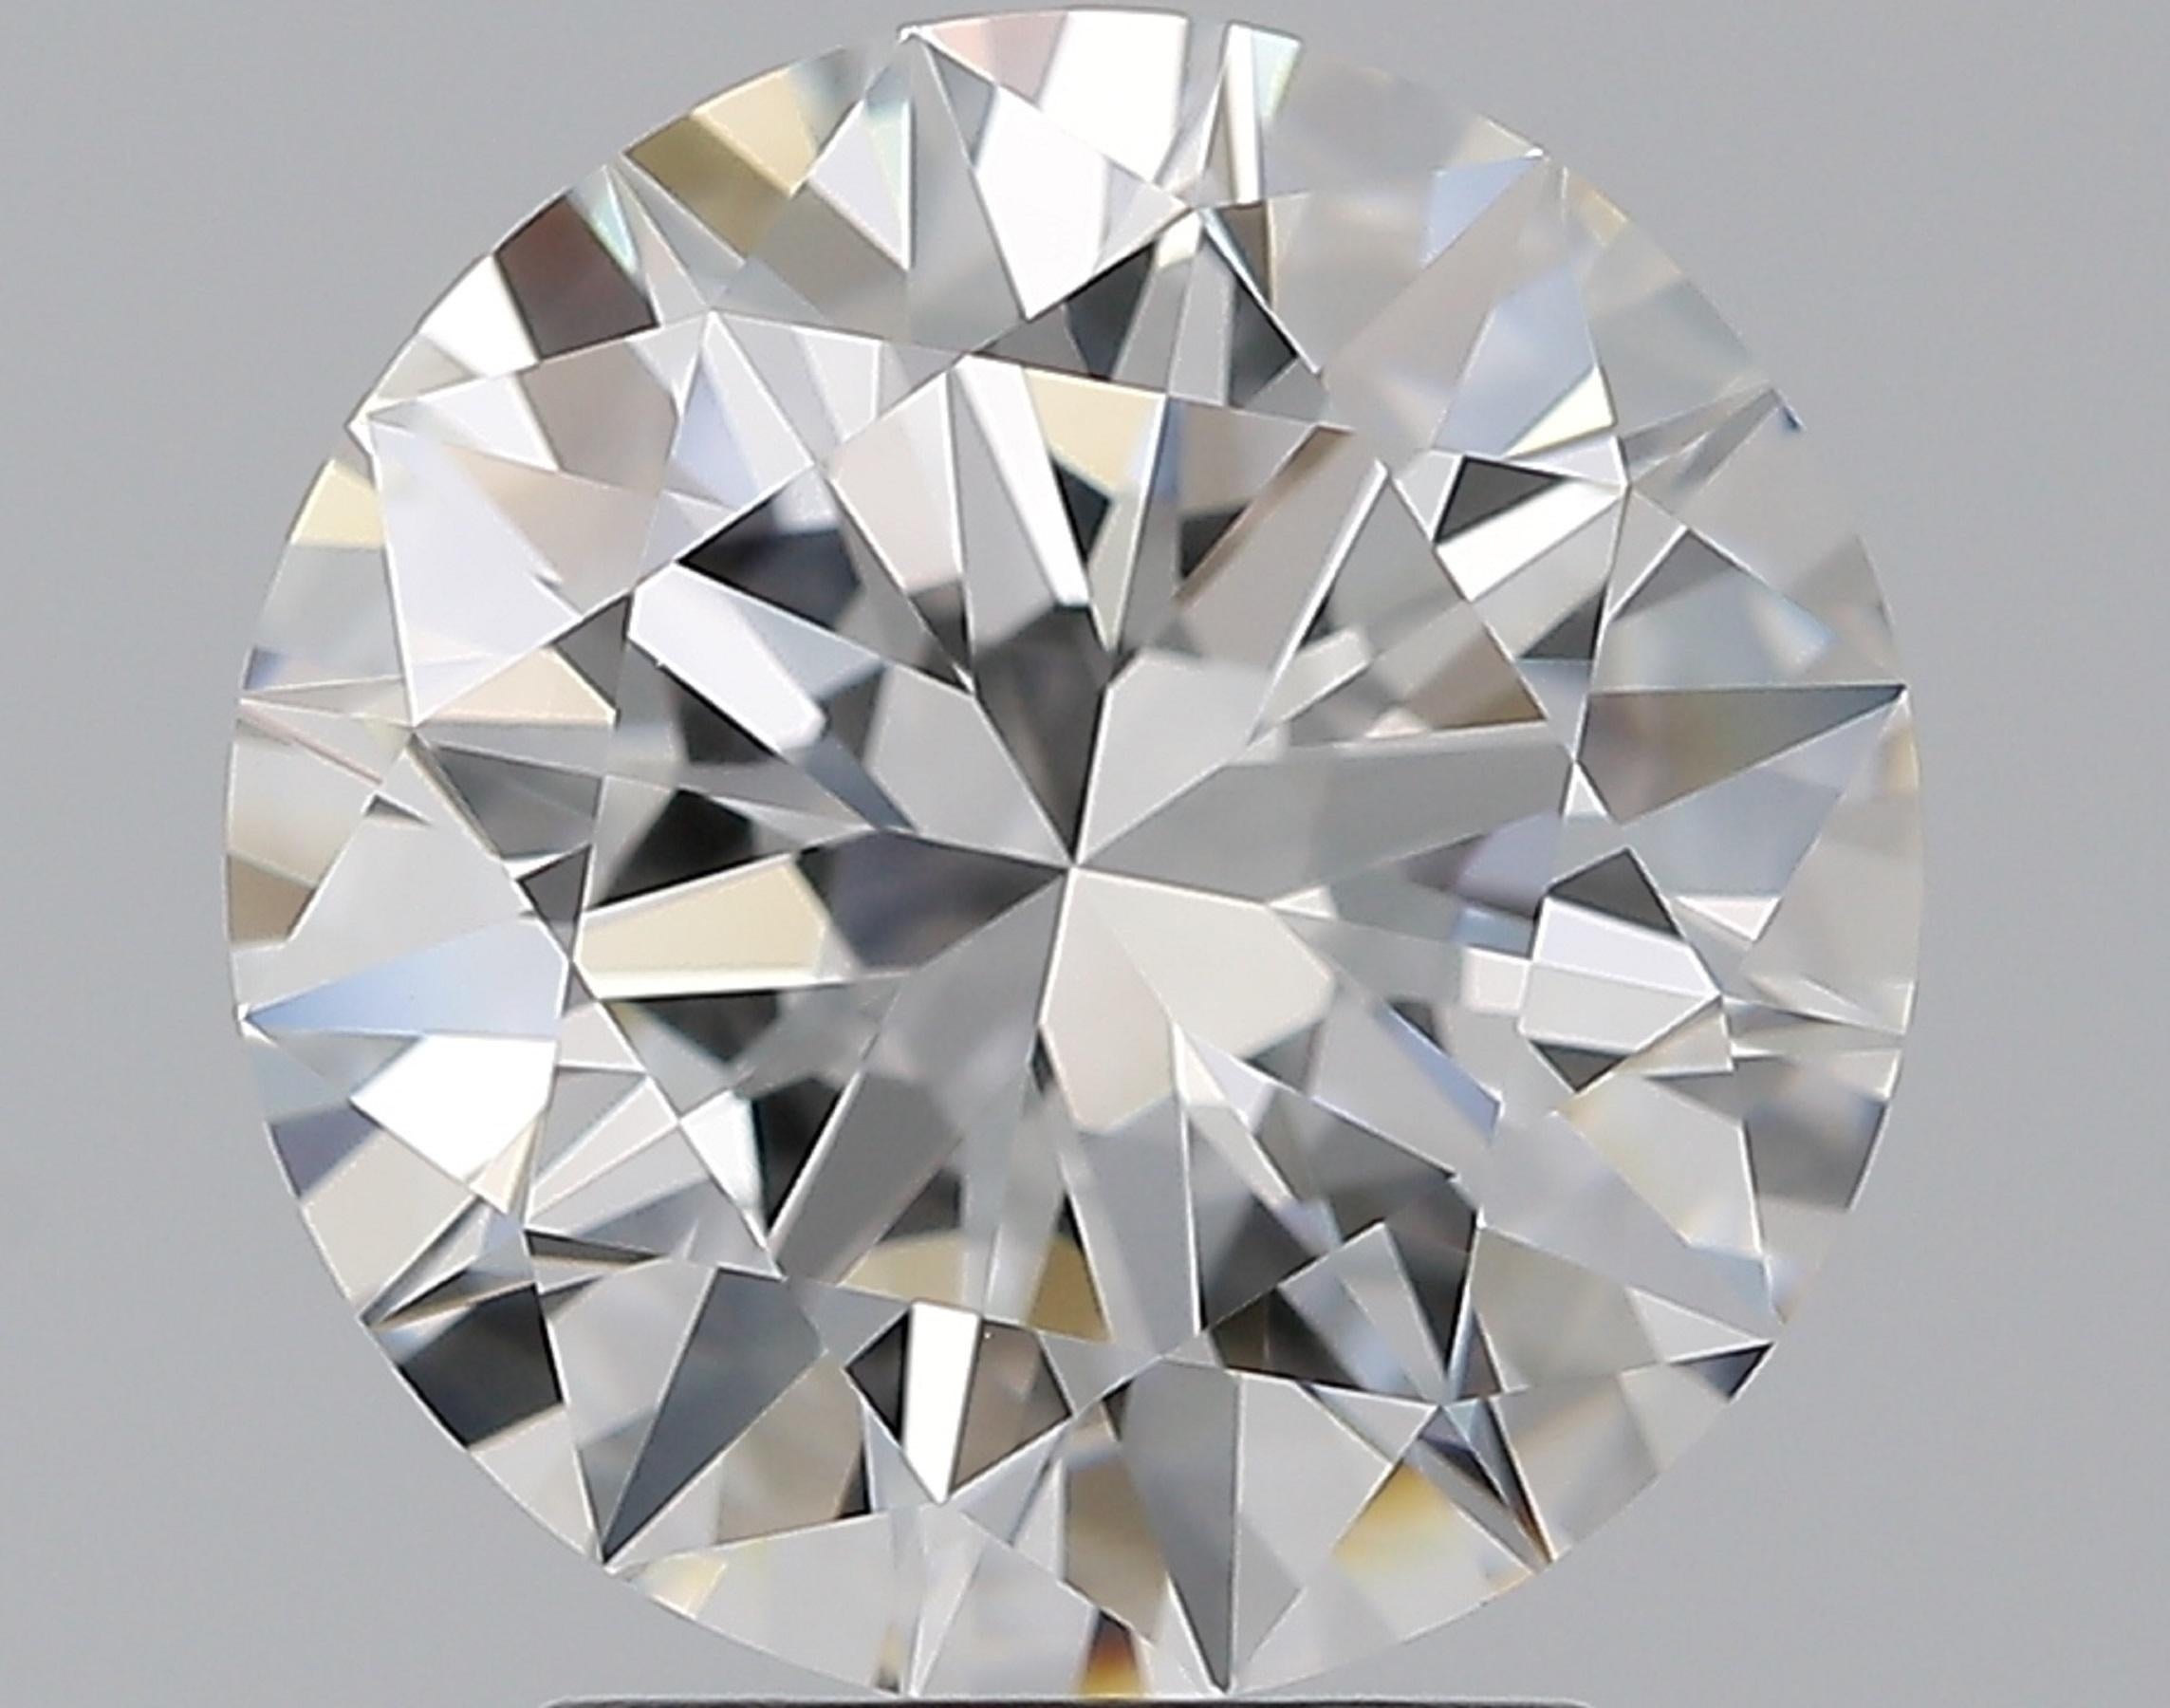 Exquisite pair of investment grade diamond studs
4 carats
E Color
VVS1 Clarity